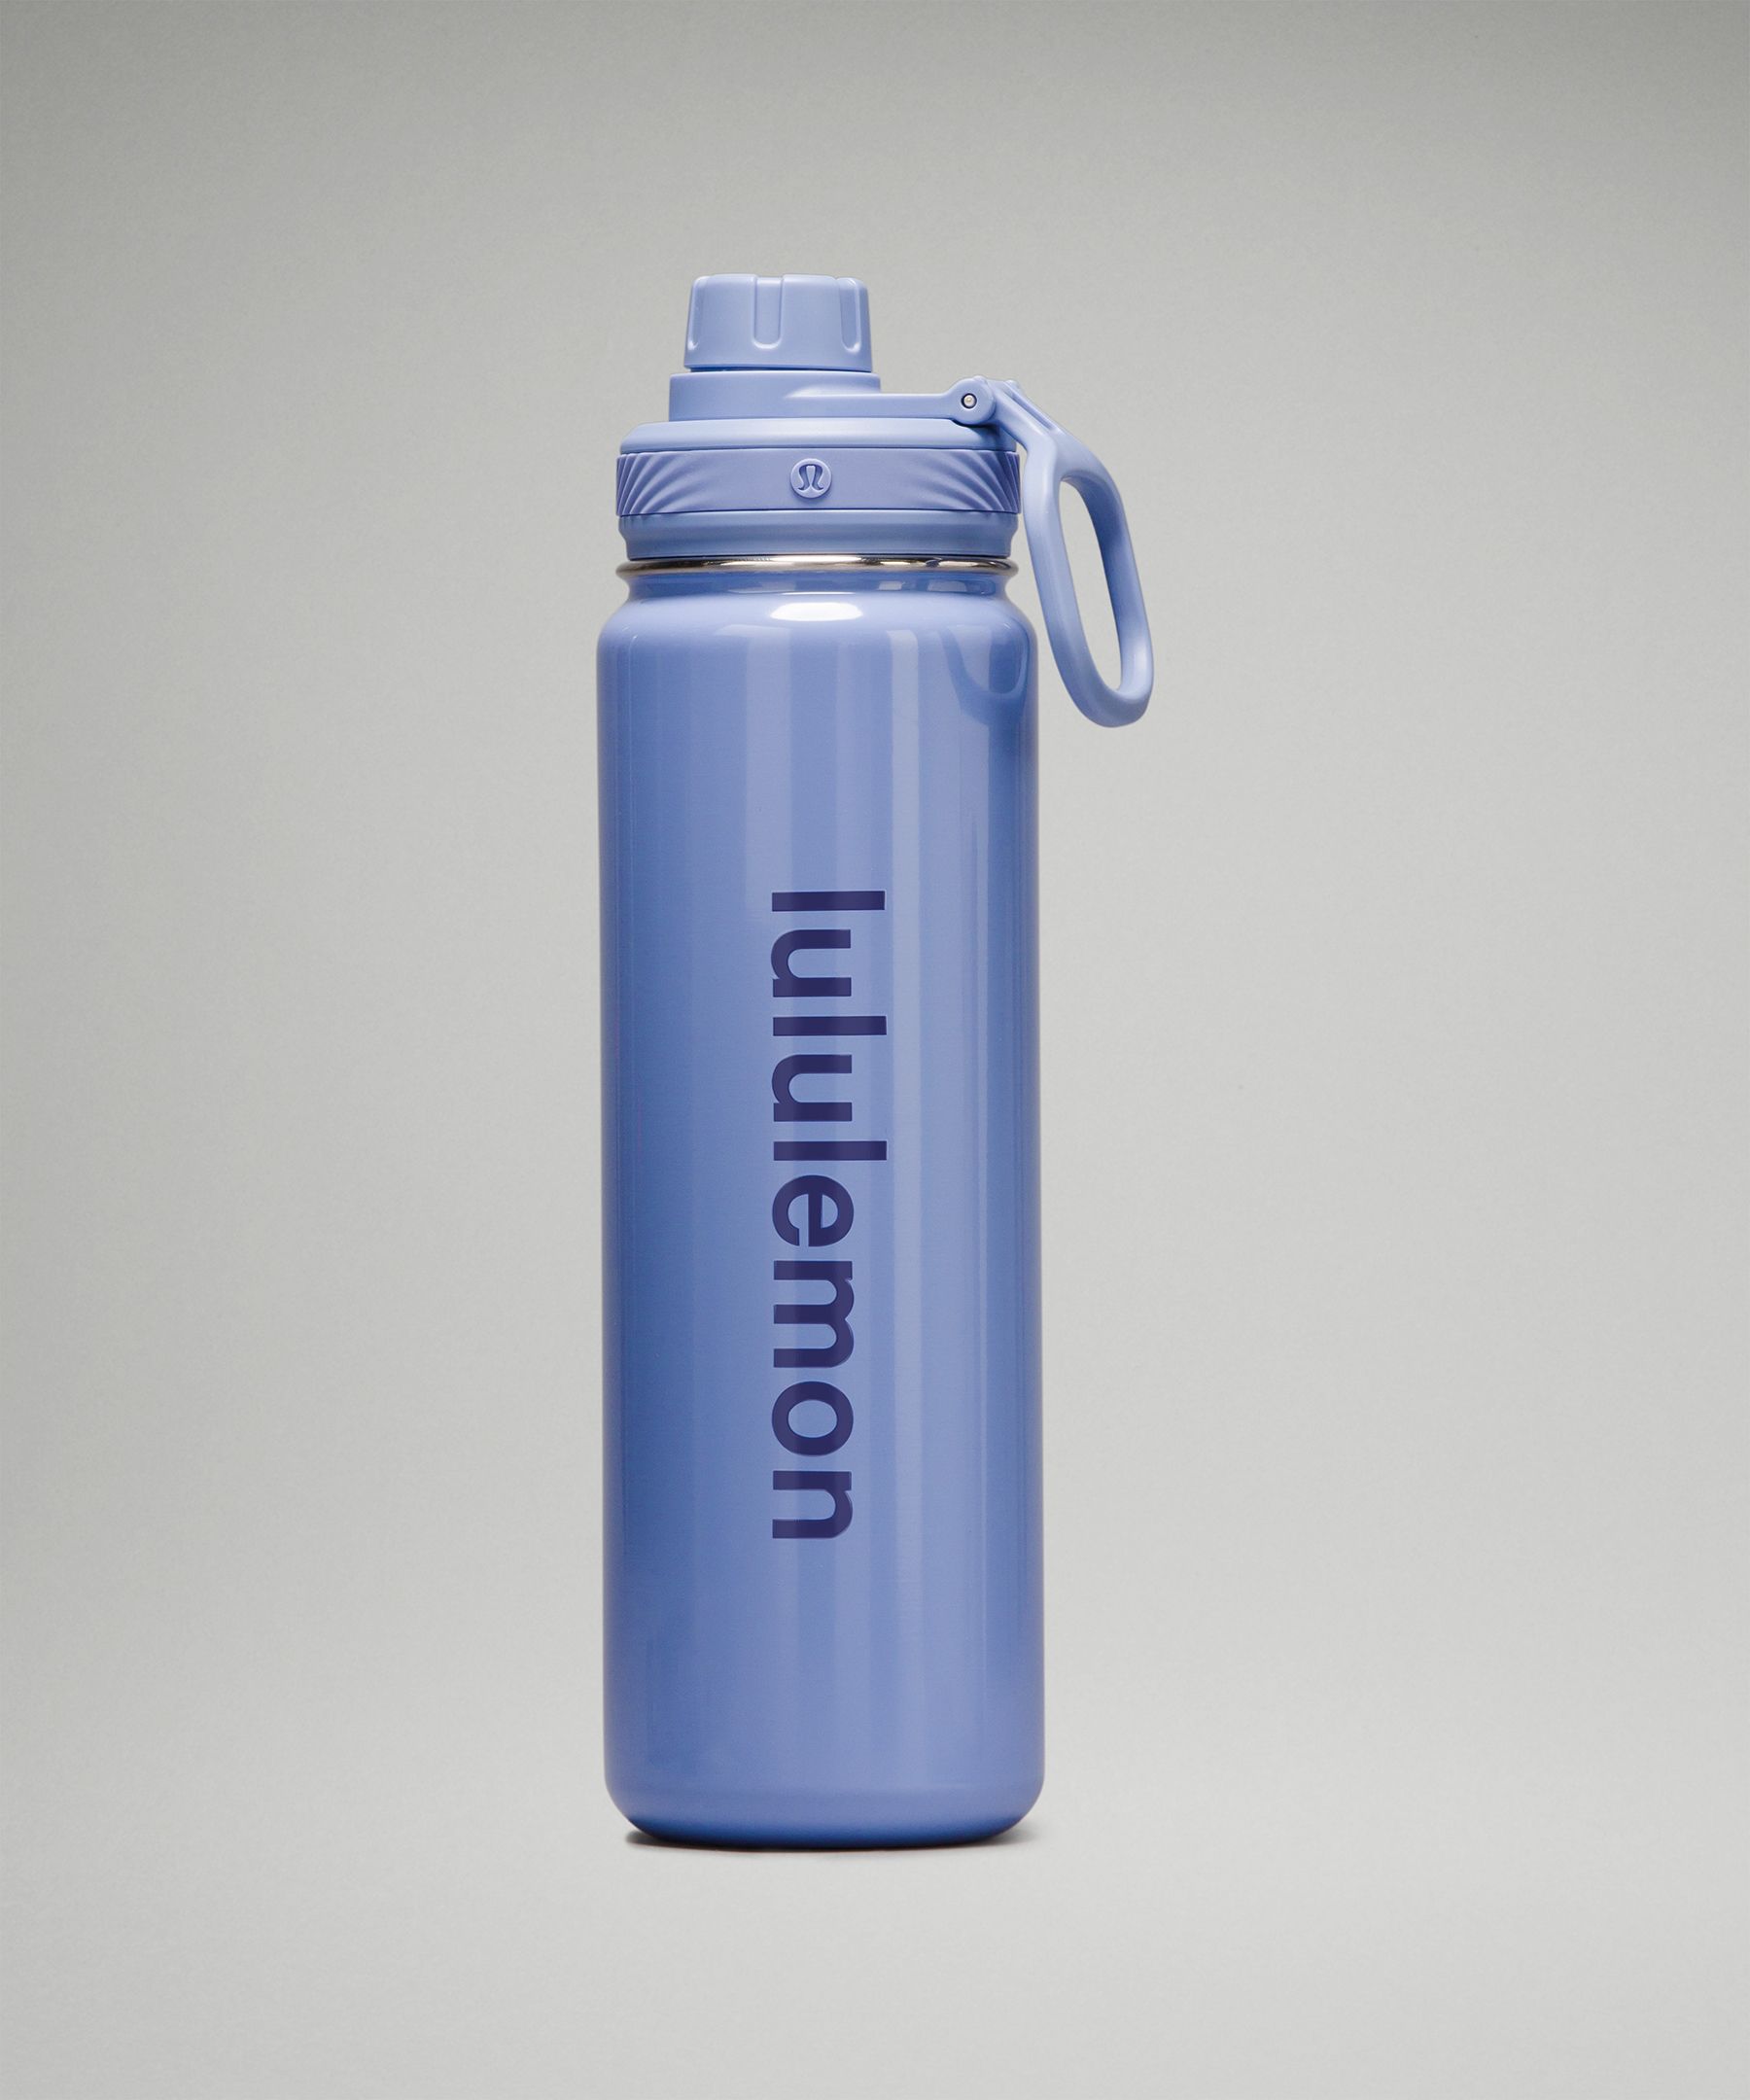 Lululemon Back To Life Sport Bottle 24oz In Blue Linen